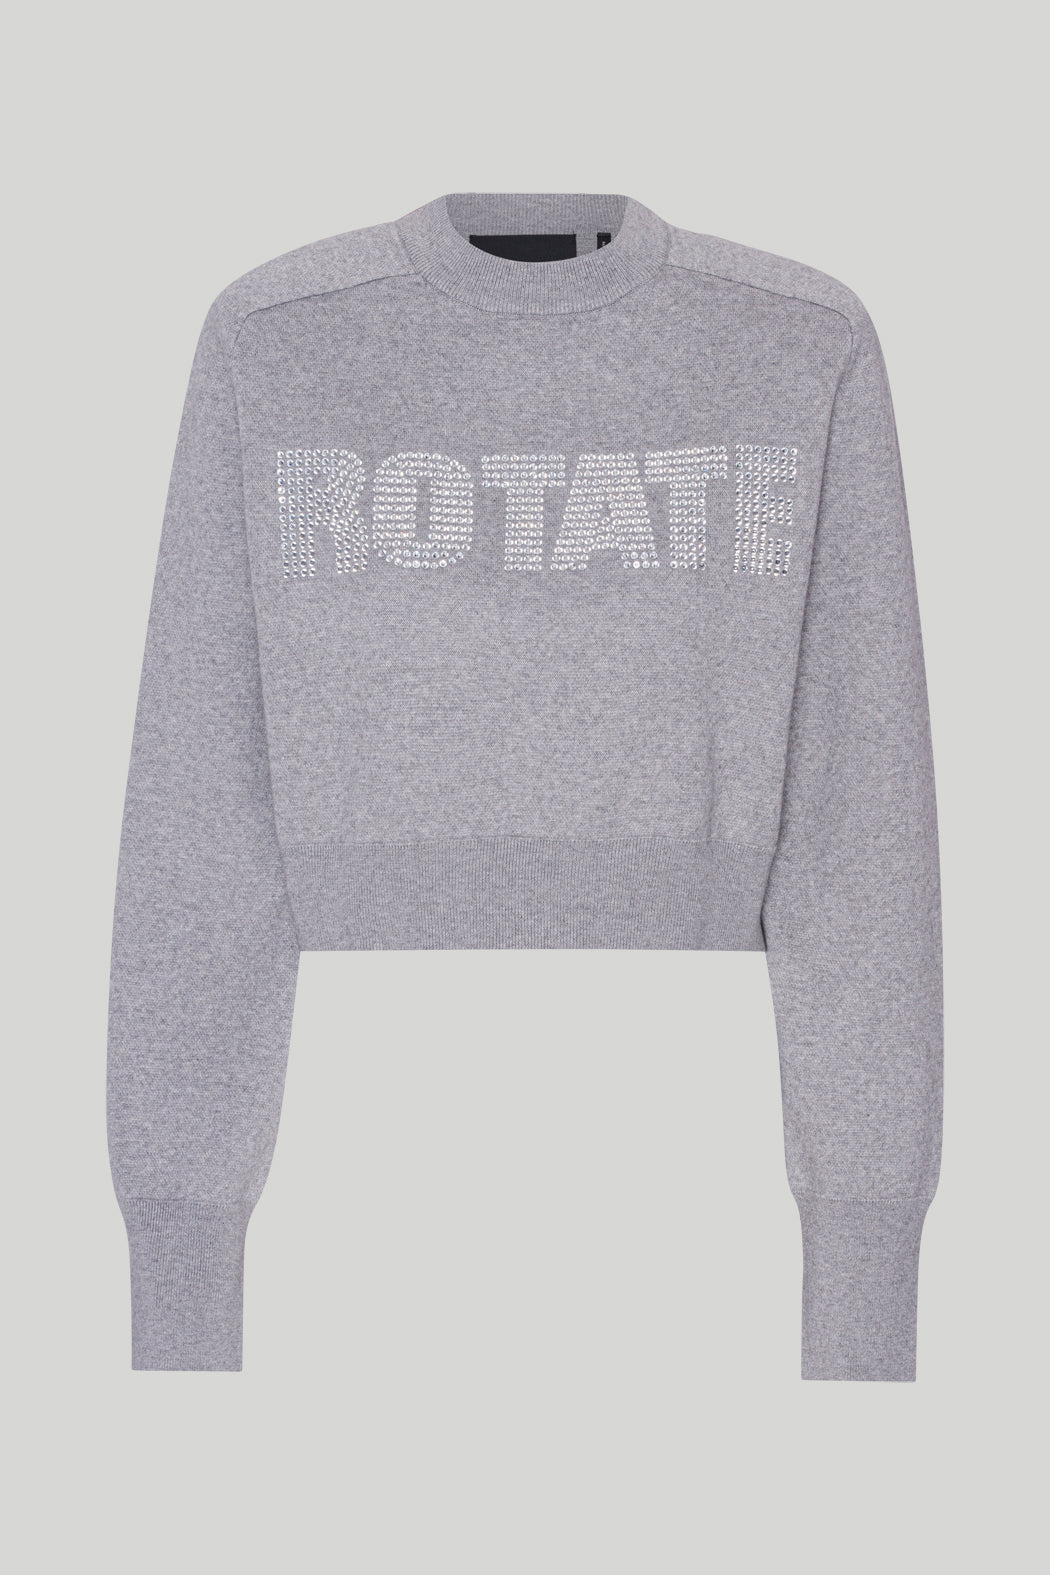 Rotate Firm Knitted Rhinestone Logo Jumper grey